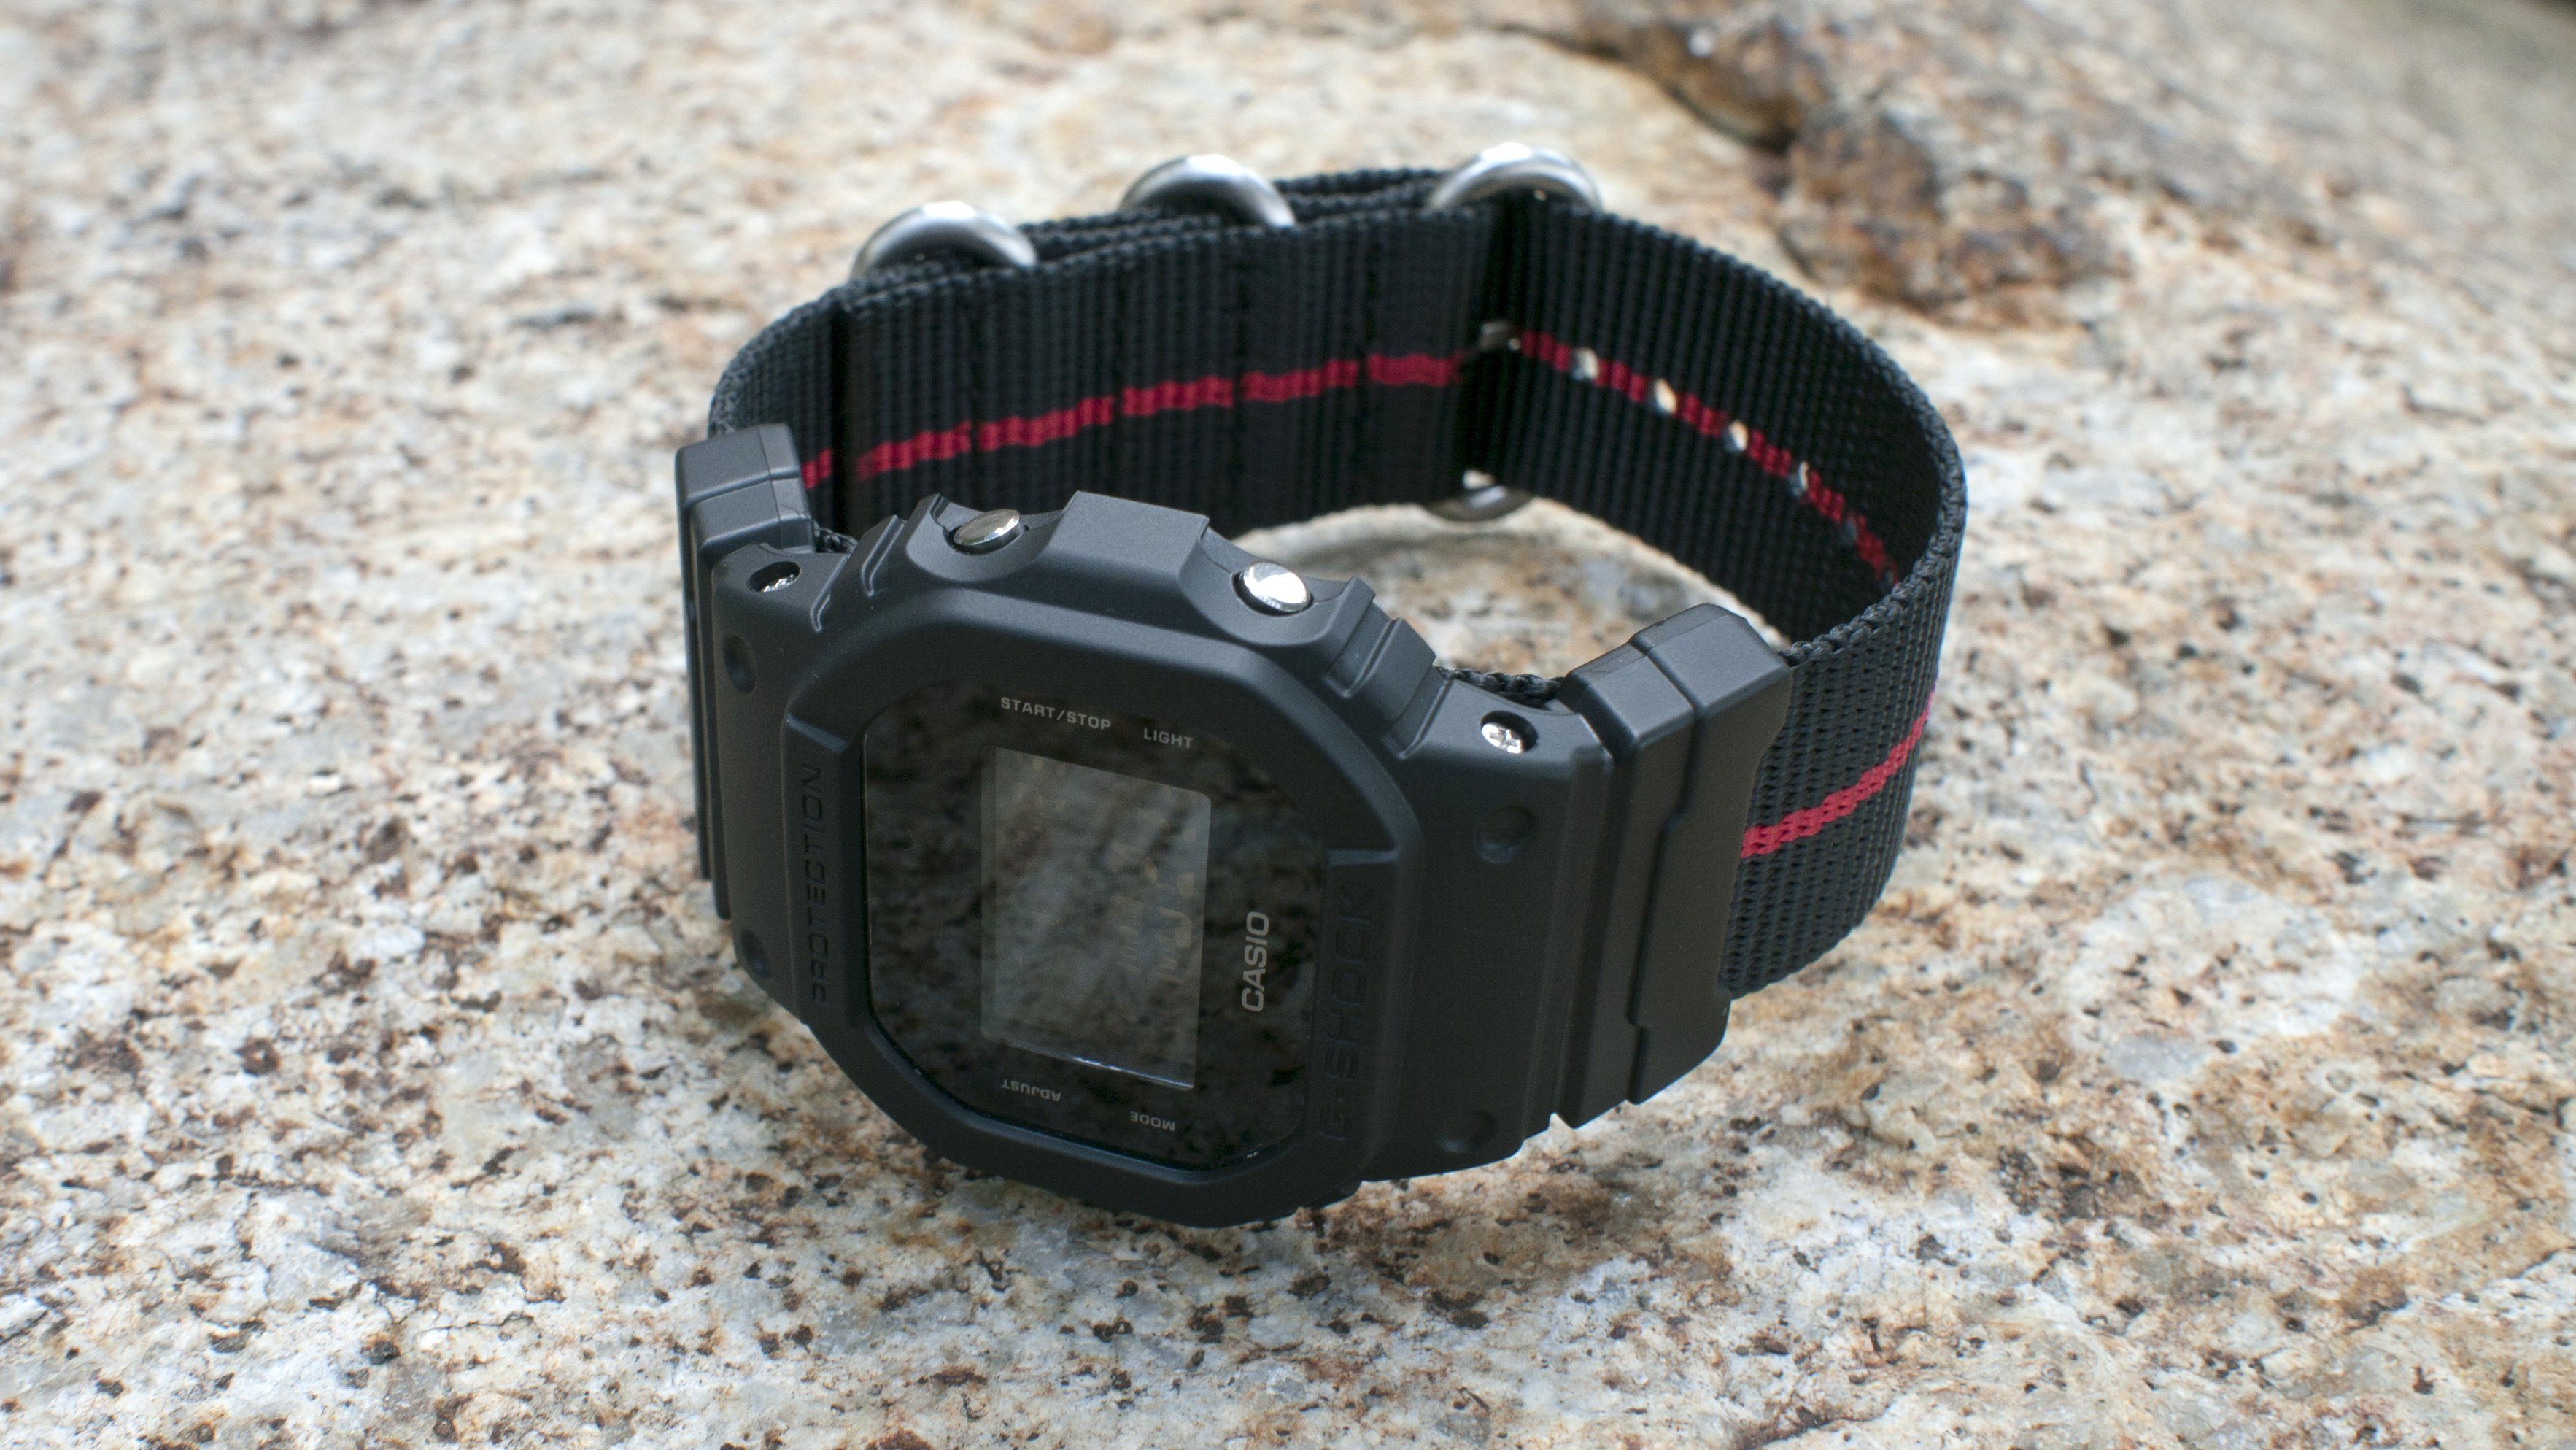 gshock dw5600 with vario ballistic nylon red black watch strap